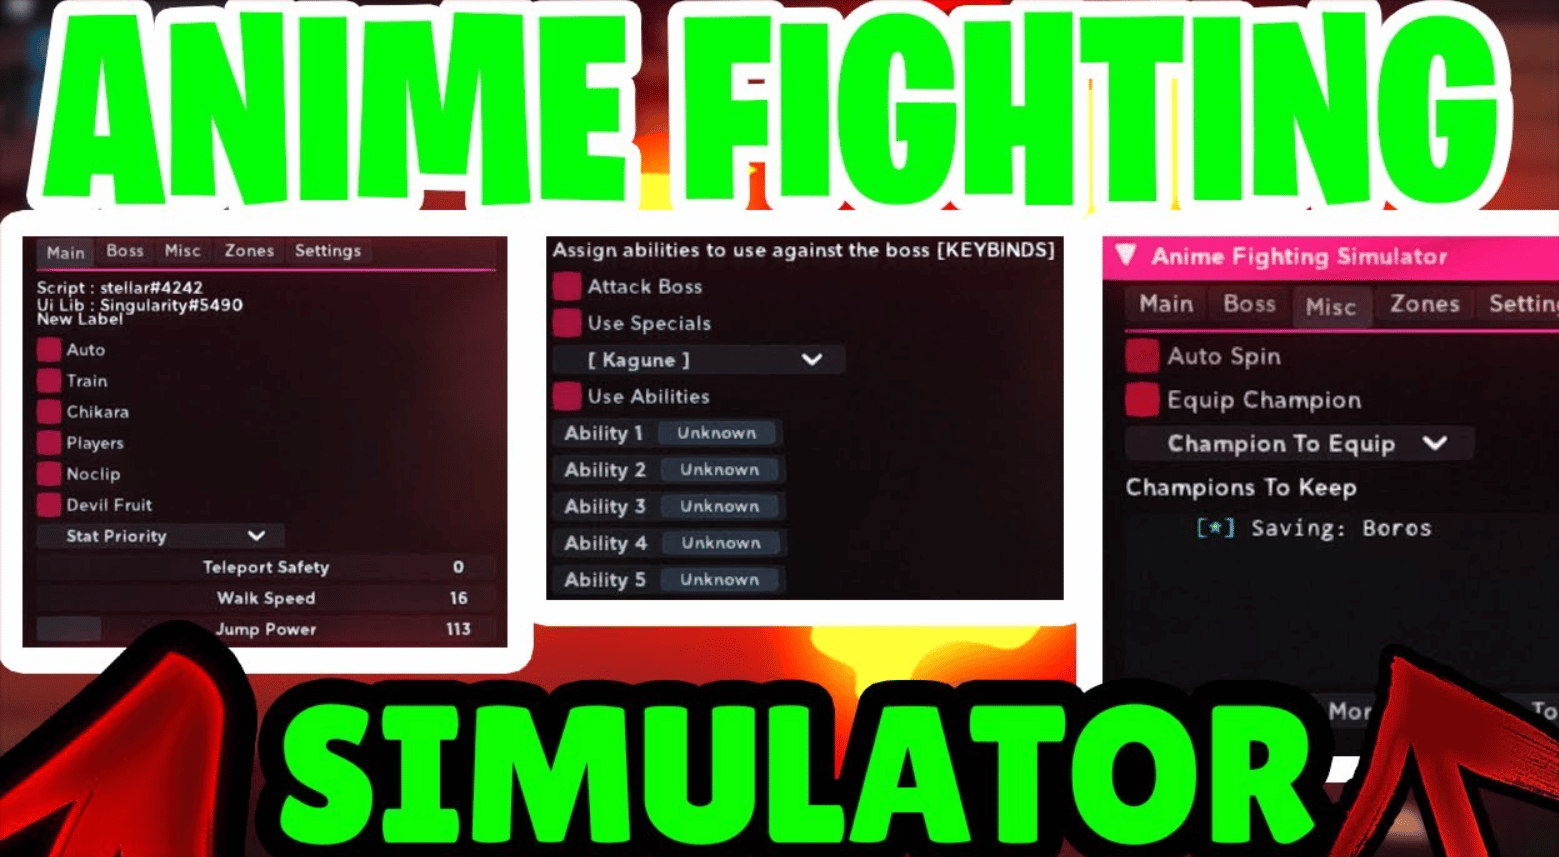 Anime Fighting Simulator Script « HDG